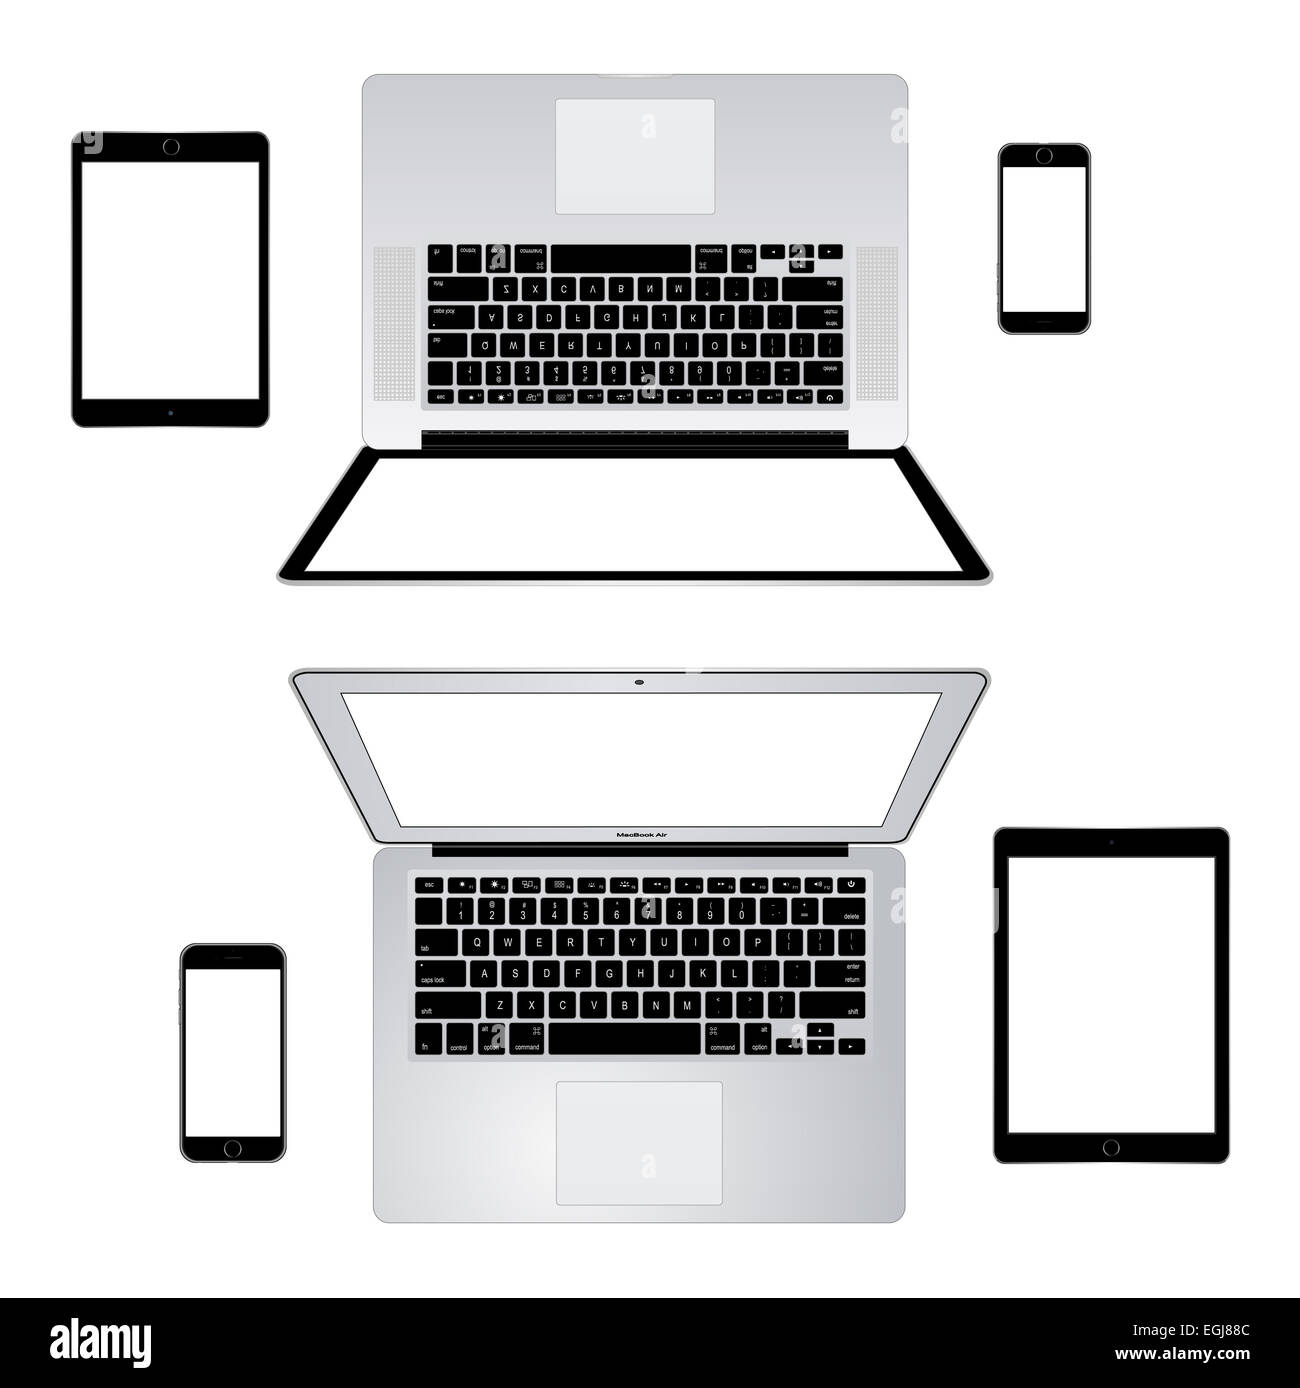 Iphone 6 ipad mini macbook pro air Photo Stock - Alamy